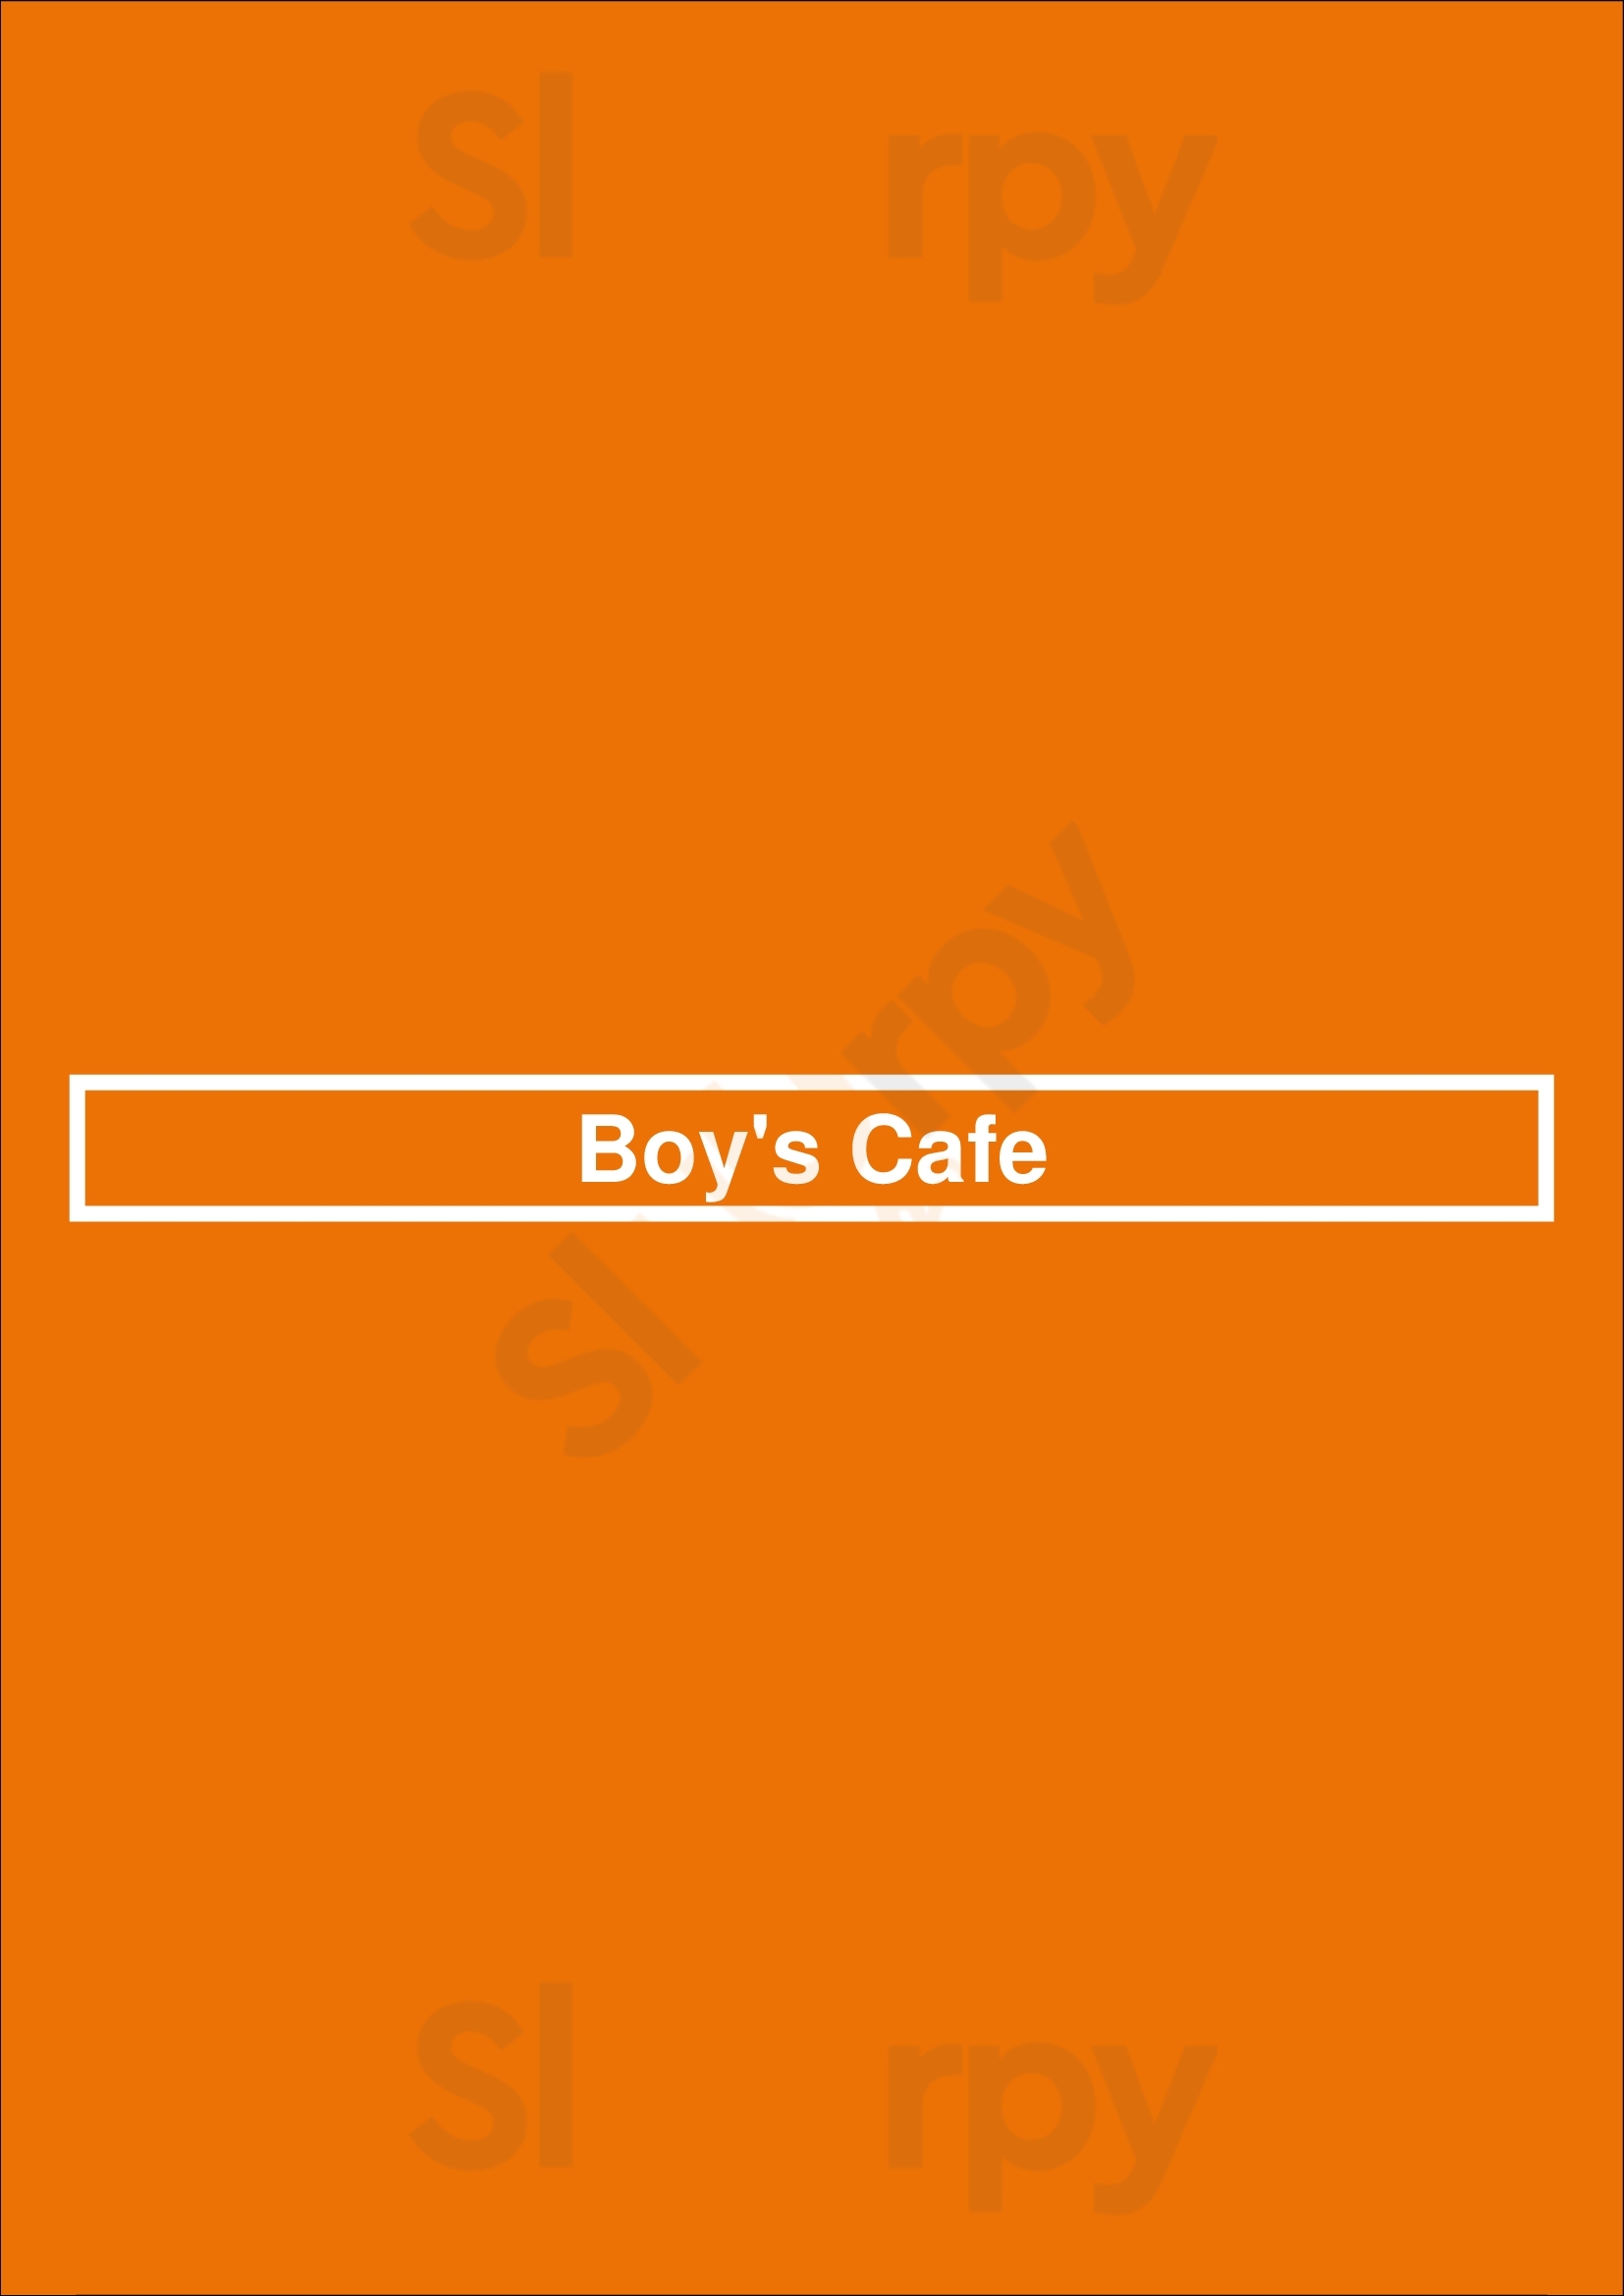 Boy's Cafe London Menu - 1